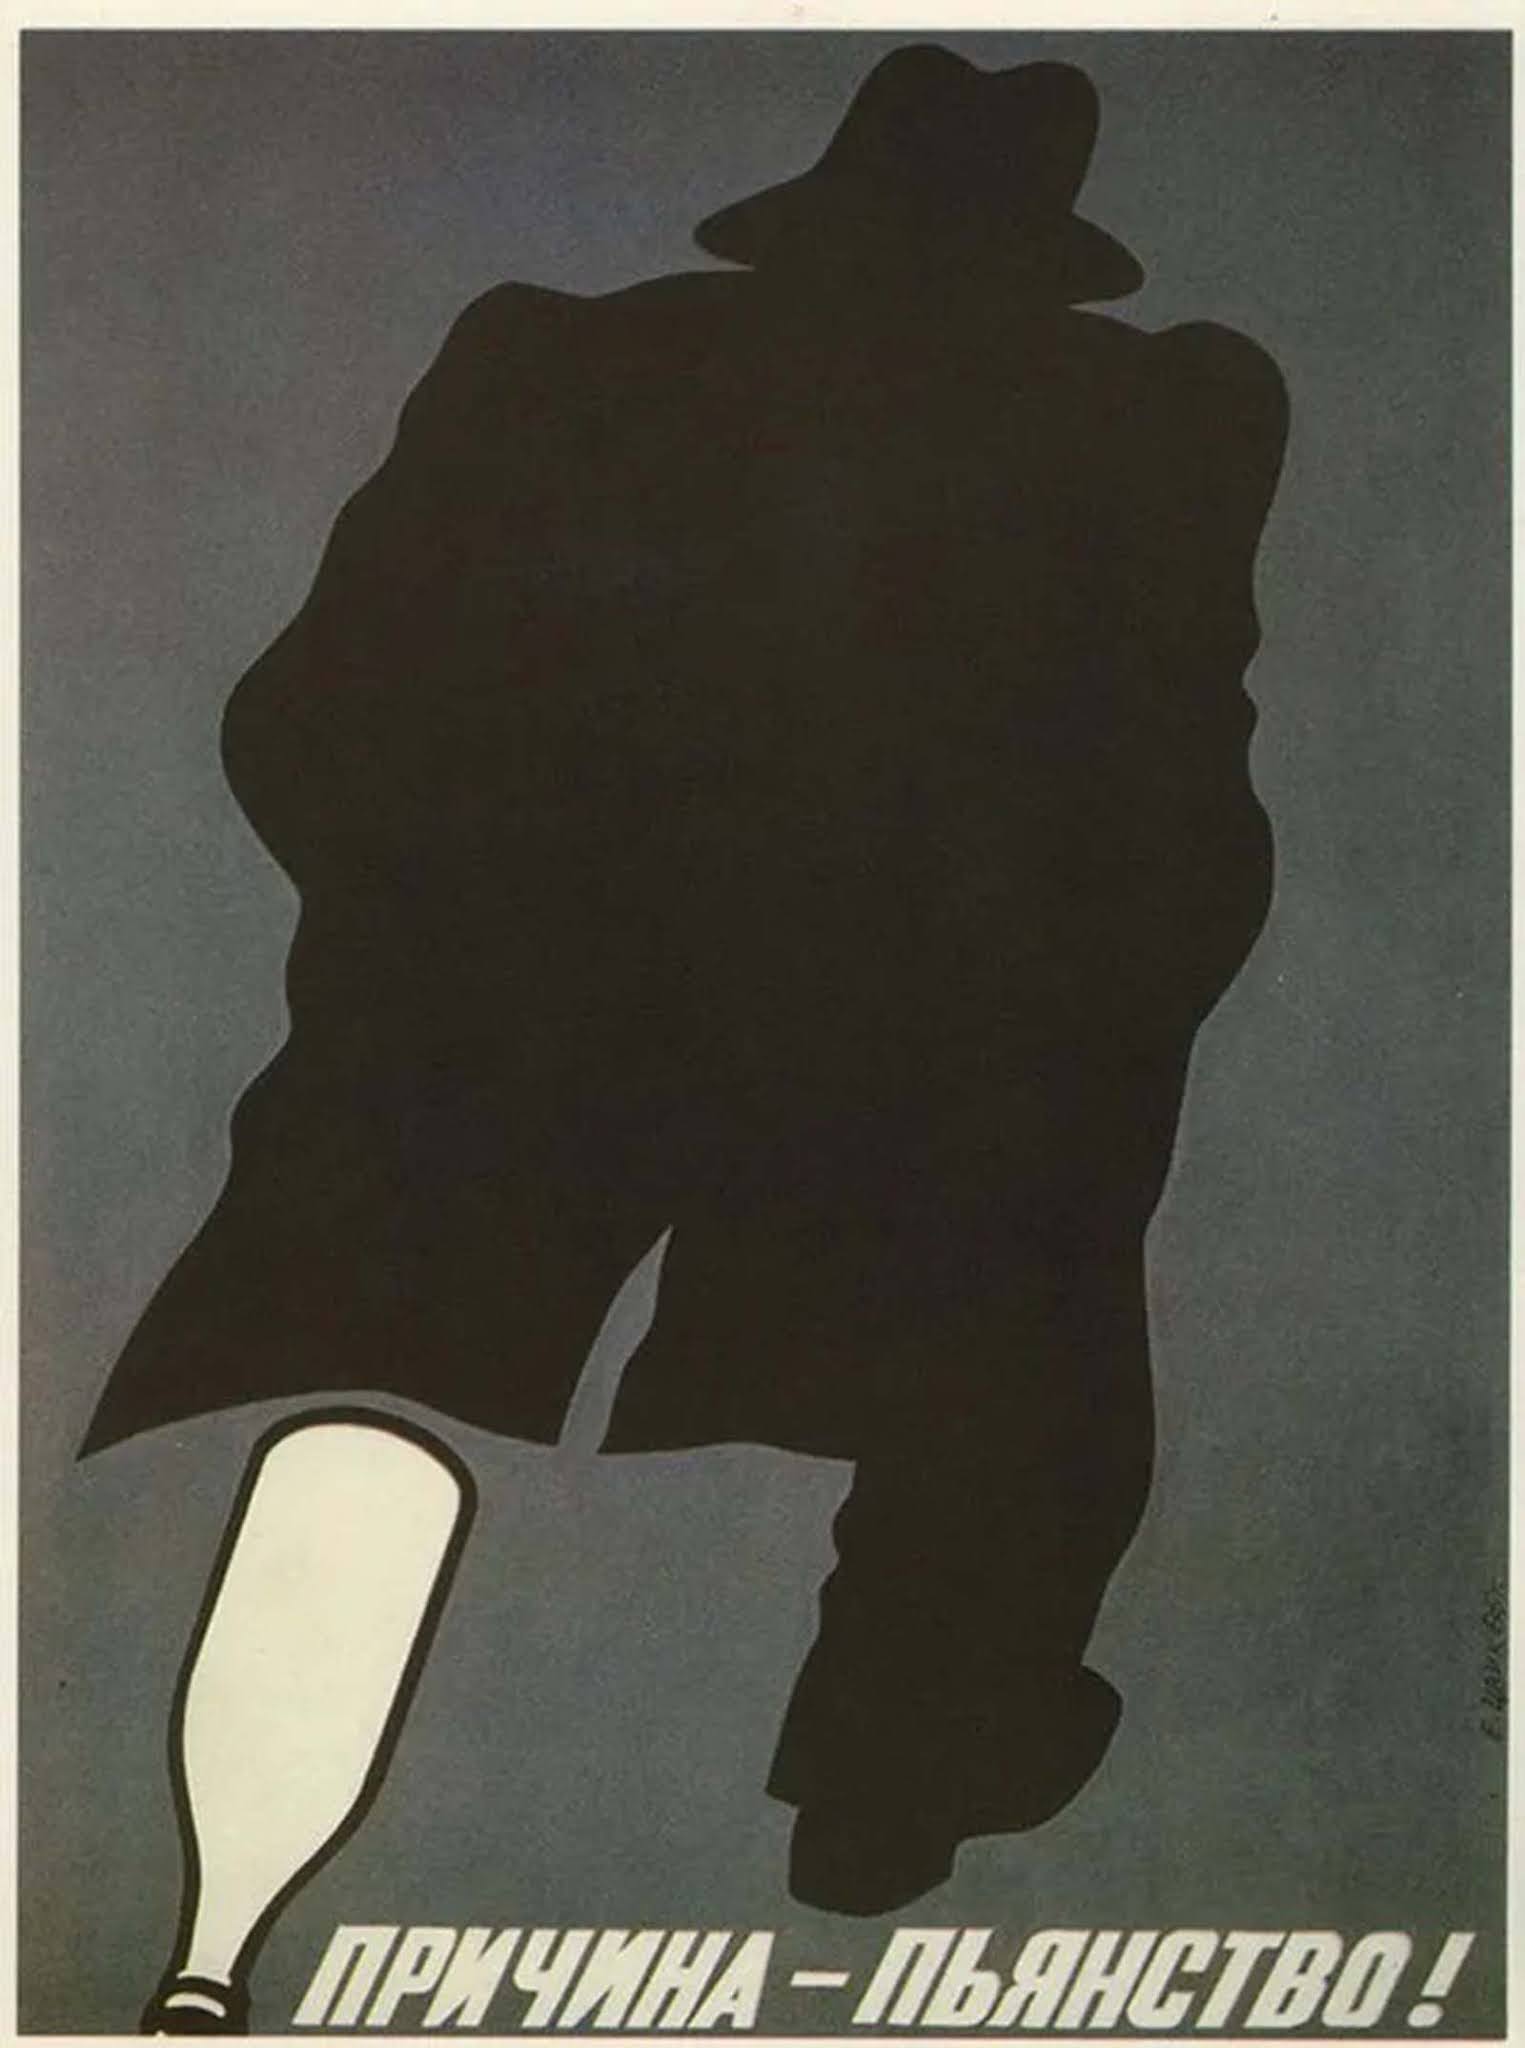 Soviet anti-alcohol posters